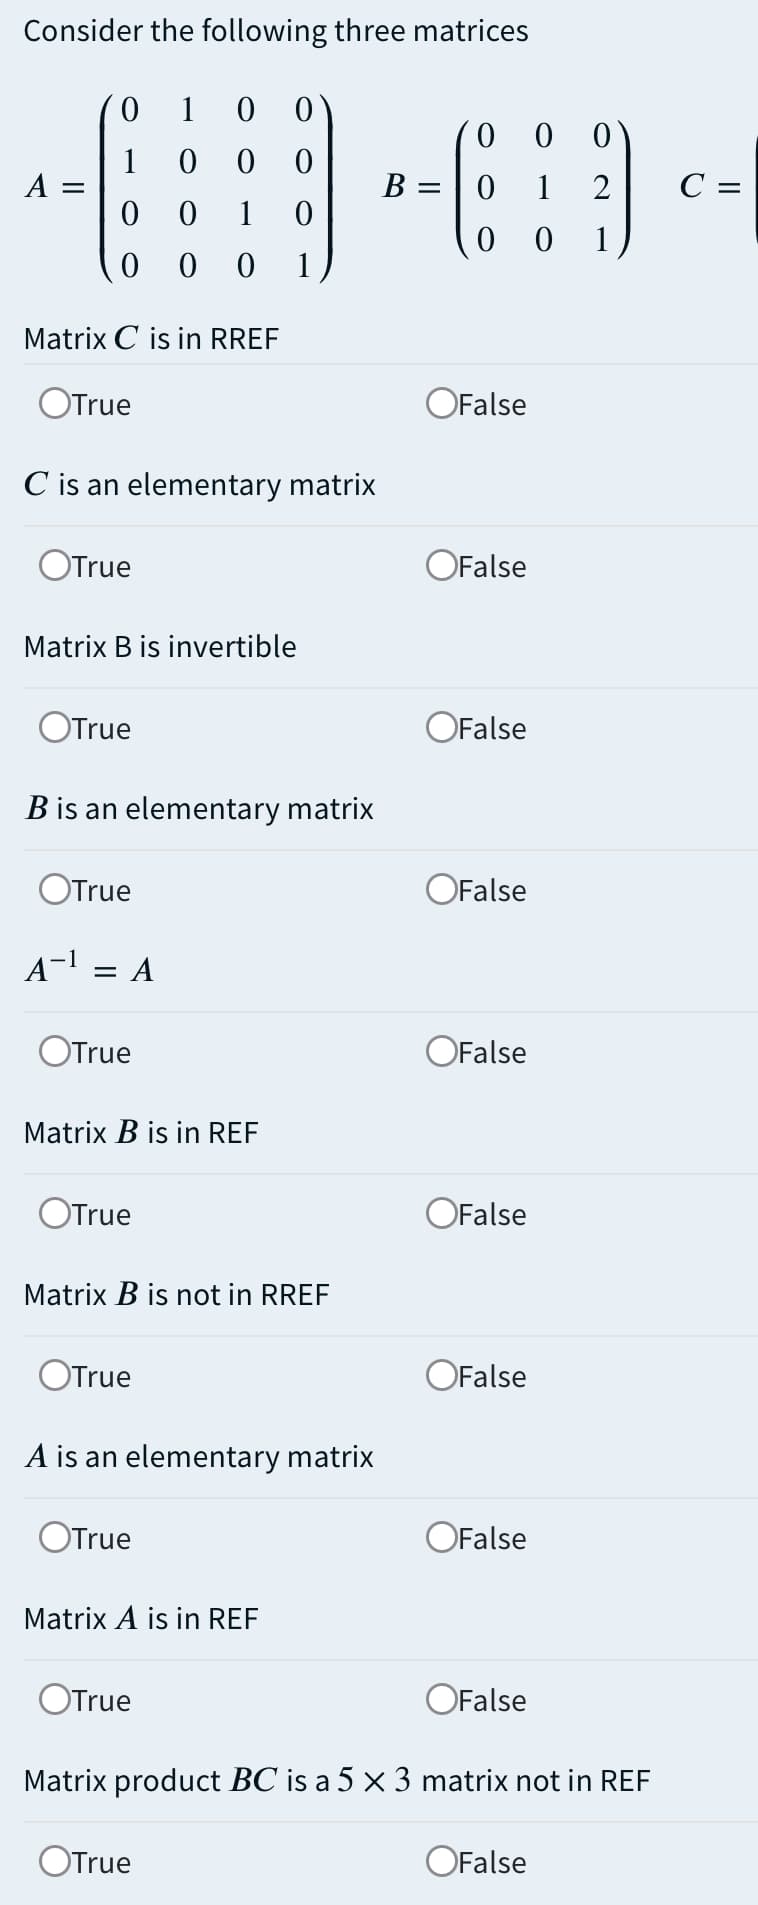 Consider the following three matrices
0.
1
1
A =
C =
В —
1
1
1
Matrix C is in RREF
OTrue
OFalse
C is an elementary matrix
OTrue
OFalse
Matrix B is invertible
OTrue
OFalse
B is an elementary matrix
OTrue
OFalse
A-1
A
OTrue
OFalse
Matrix B is in REF
OTrue
OFalse
Matrix B is not in RREF
OTrue
OFalse
A is an elementary matrix
OTrue
OFalse
Matrix A is in REF
OTrue
OFalse
Matrix product BC is a 5 x 3 matrix not in REF
OTrue
OFalse
